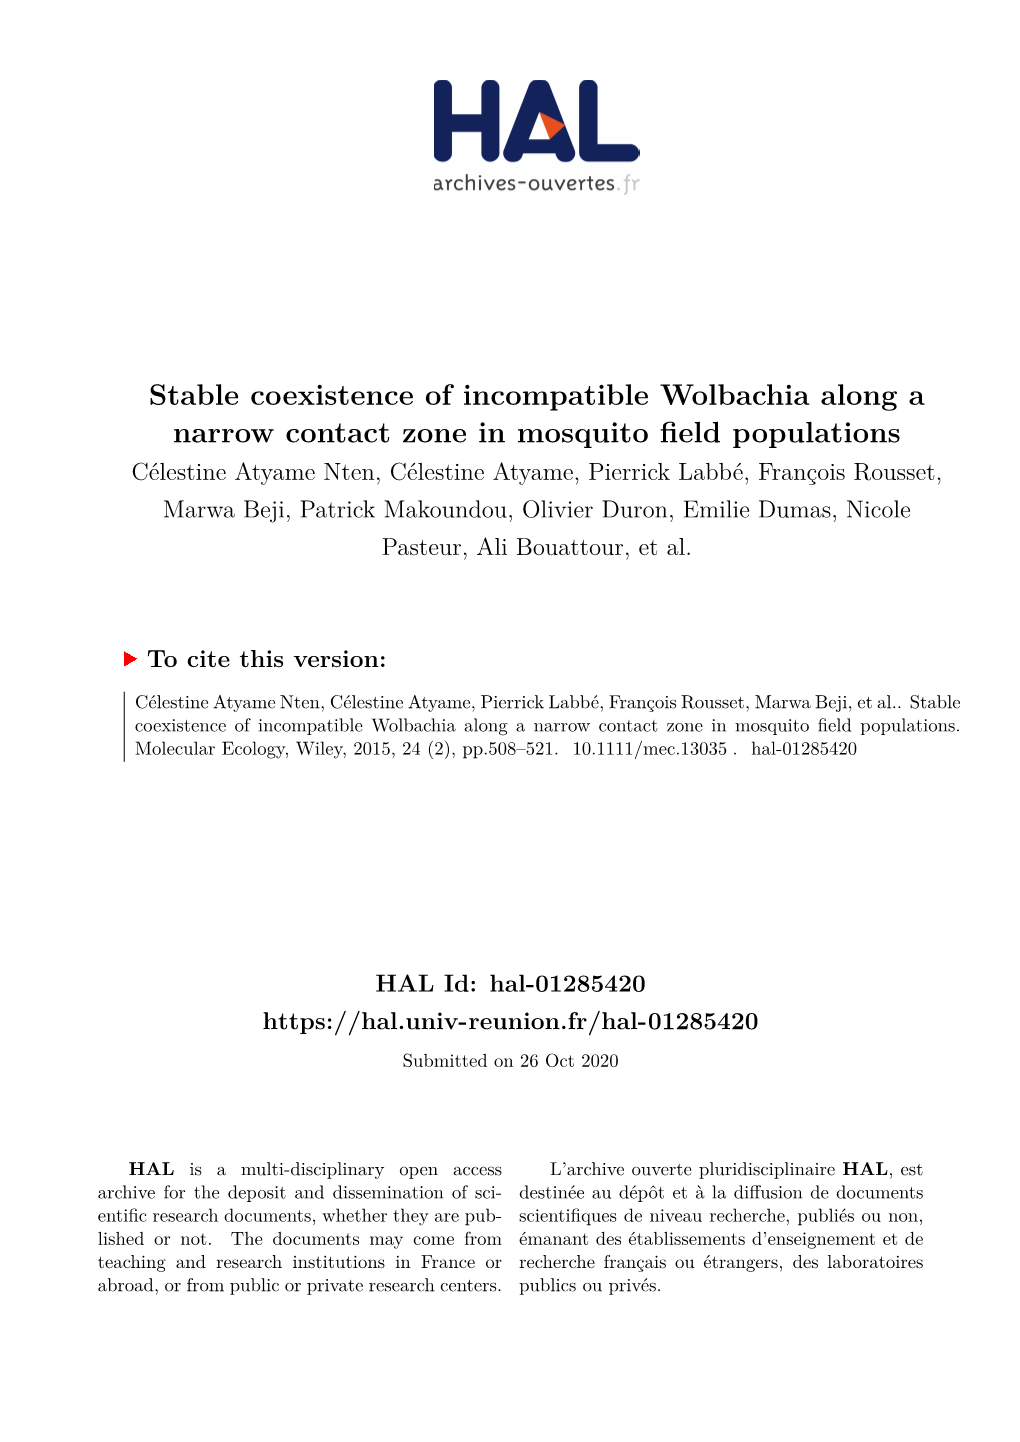 Stable Coexistence of Incompatible Wolbachia Along a Narrow Contact